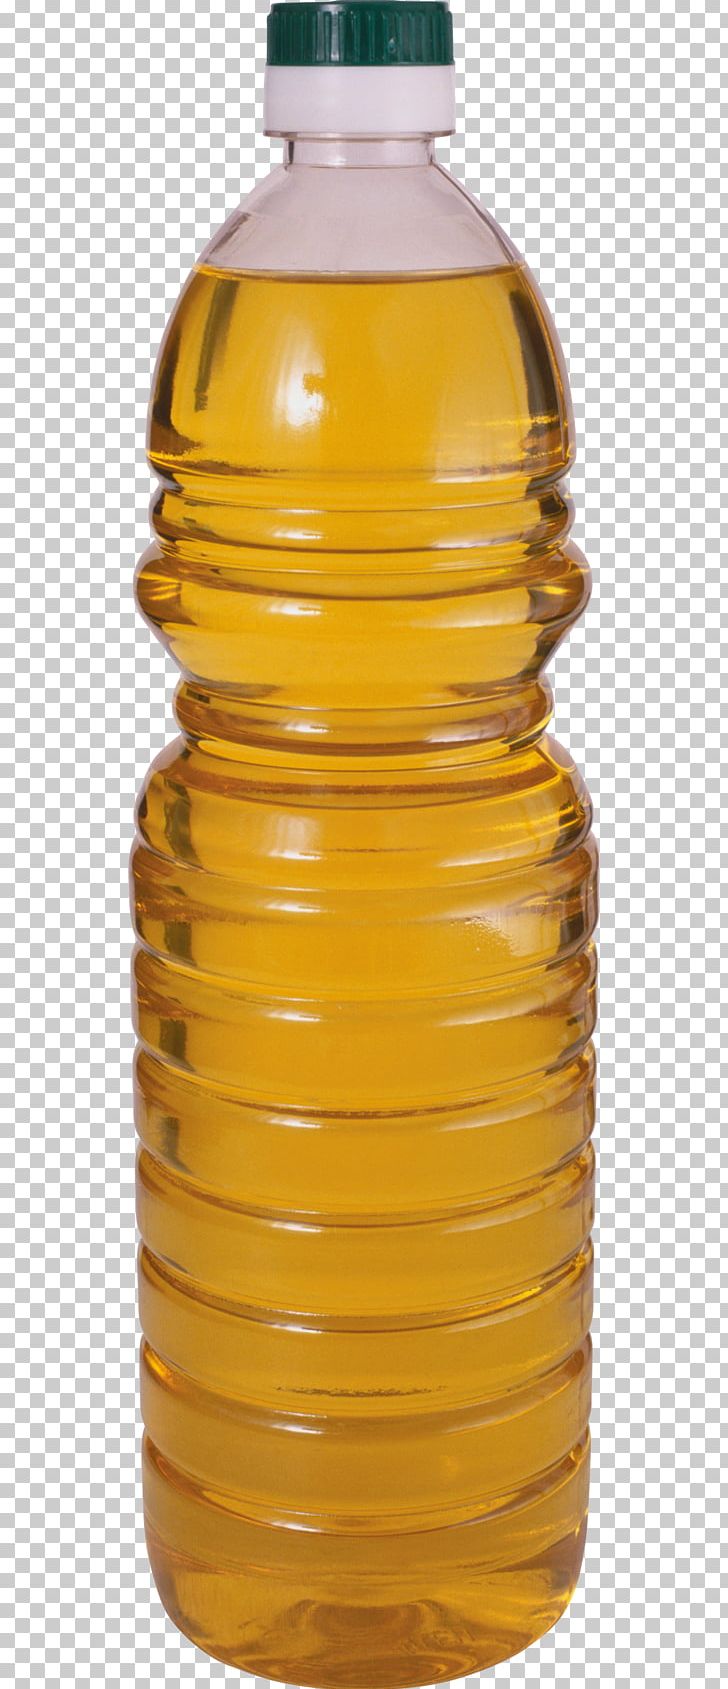 Soybean Oil Sunflower Oil Vegetable Oil Bottle PNG, Clipart, Bottle, Computer Icons, Digital Image, Food Drinks, Glass Bottle Free PNG Download